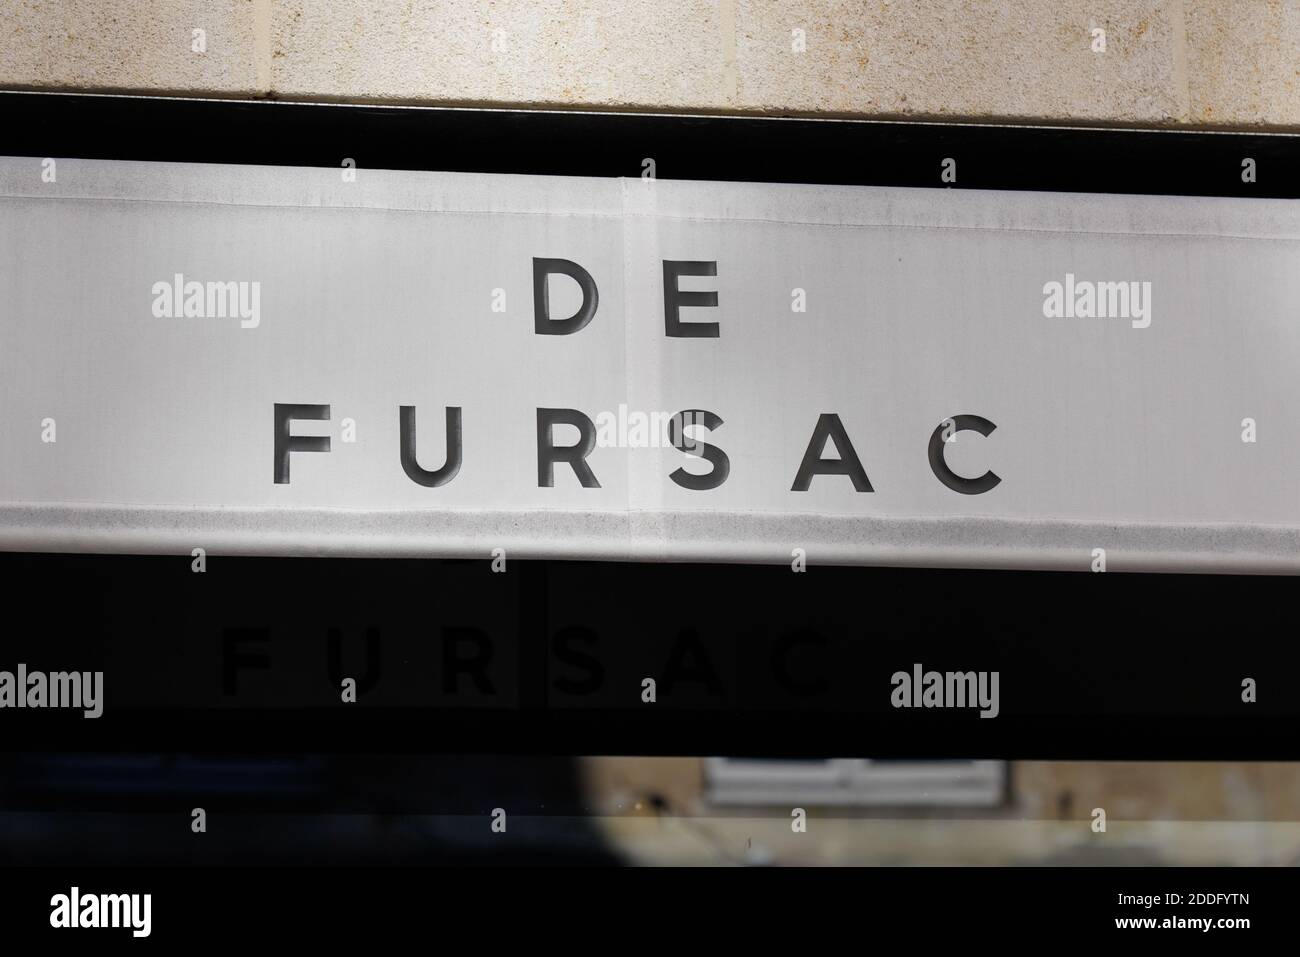 Bordeaux , Aquitaine / France - 11 08 2020 : De Fursac logo and sign ...